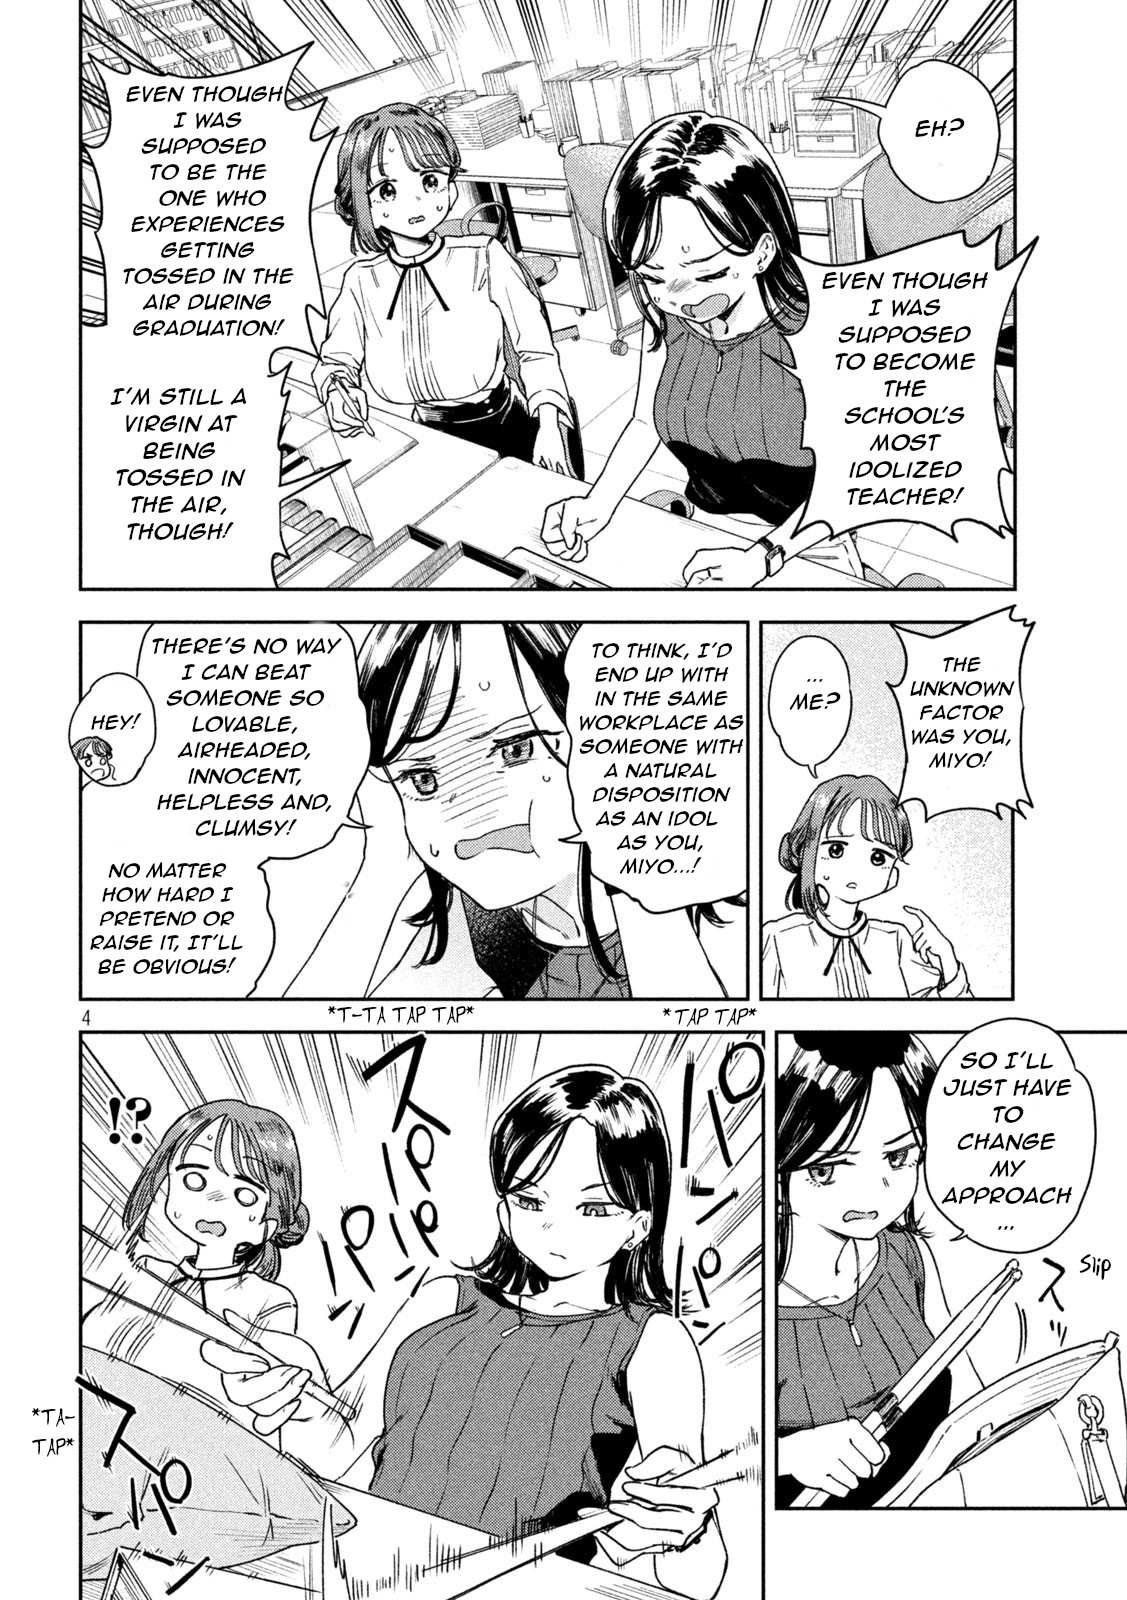 Miyo-Chan Sensei Said So - chapter 4 - #5